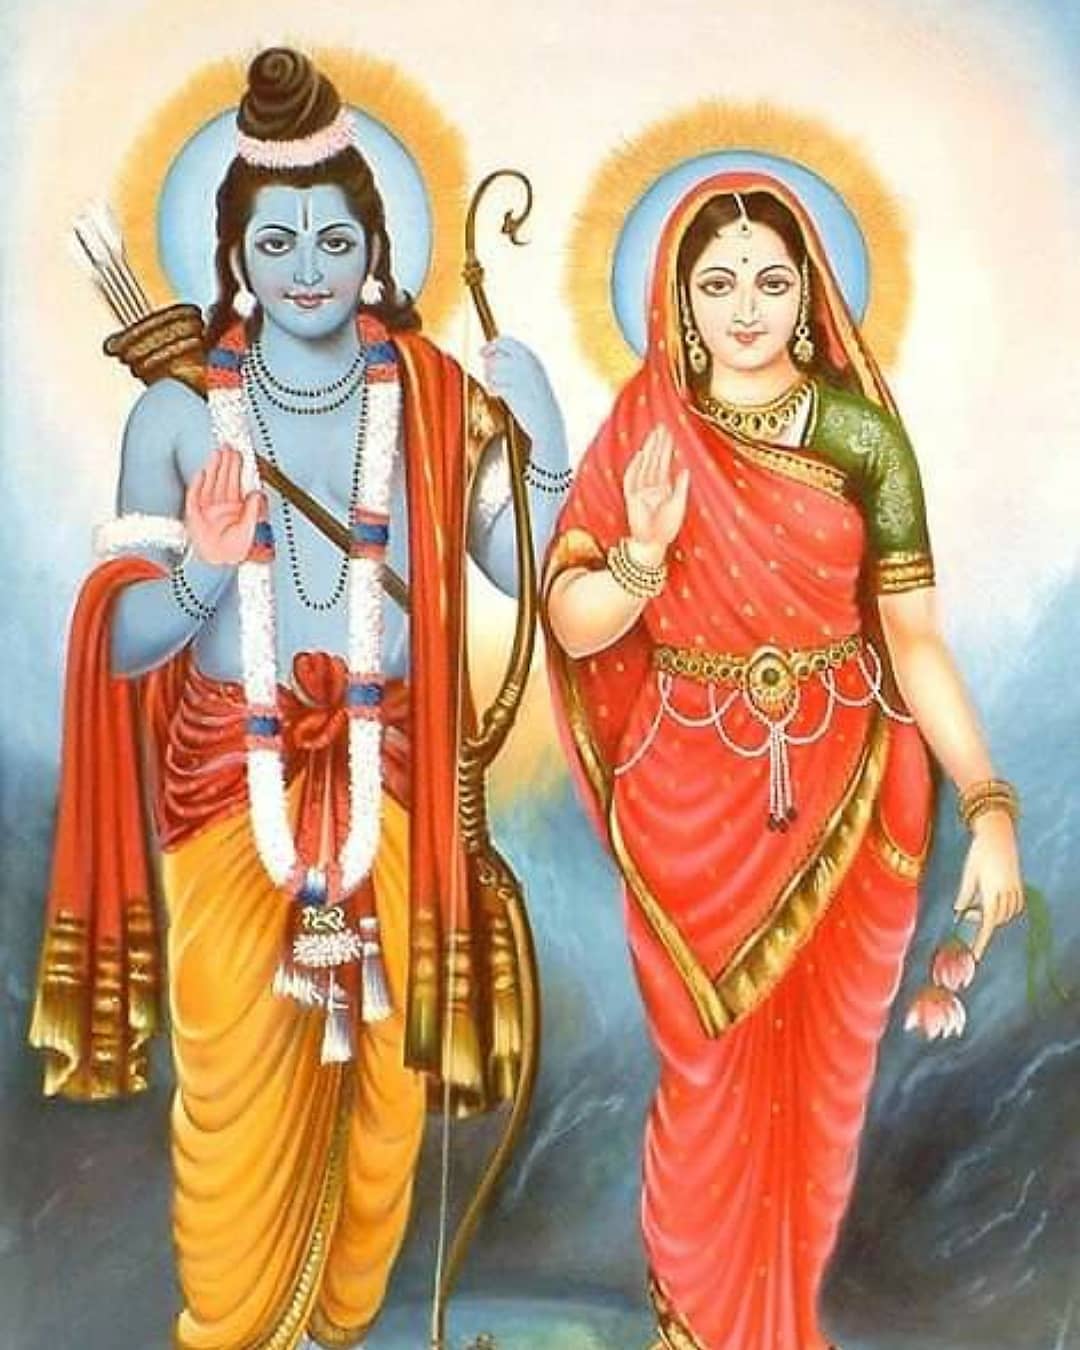 867 Shree Lord Rama Images  Bhagwan Ram Sita Photo Pics with Wallpaper